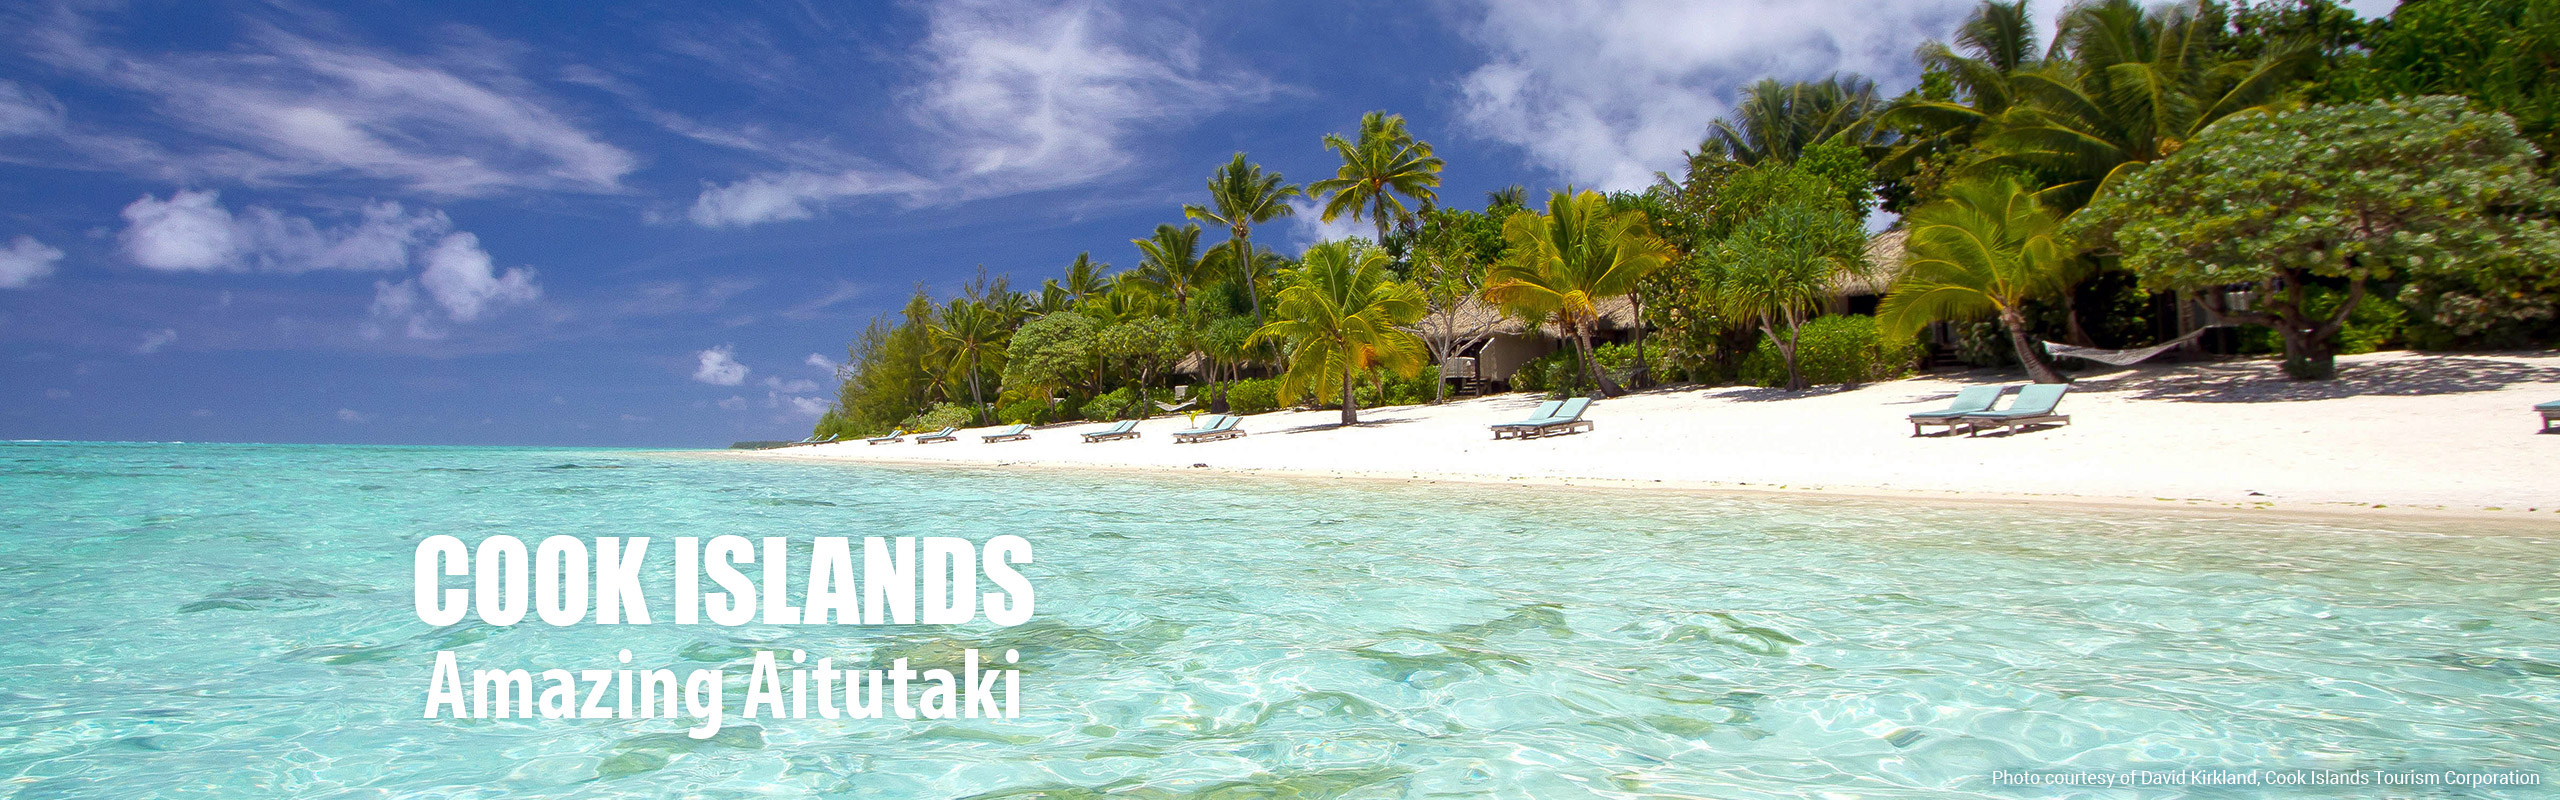 Cook Islands Vacation